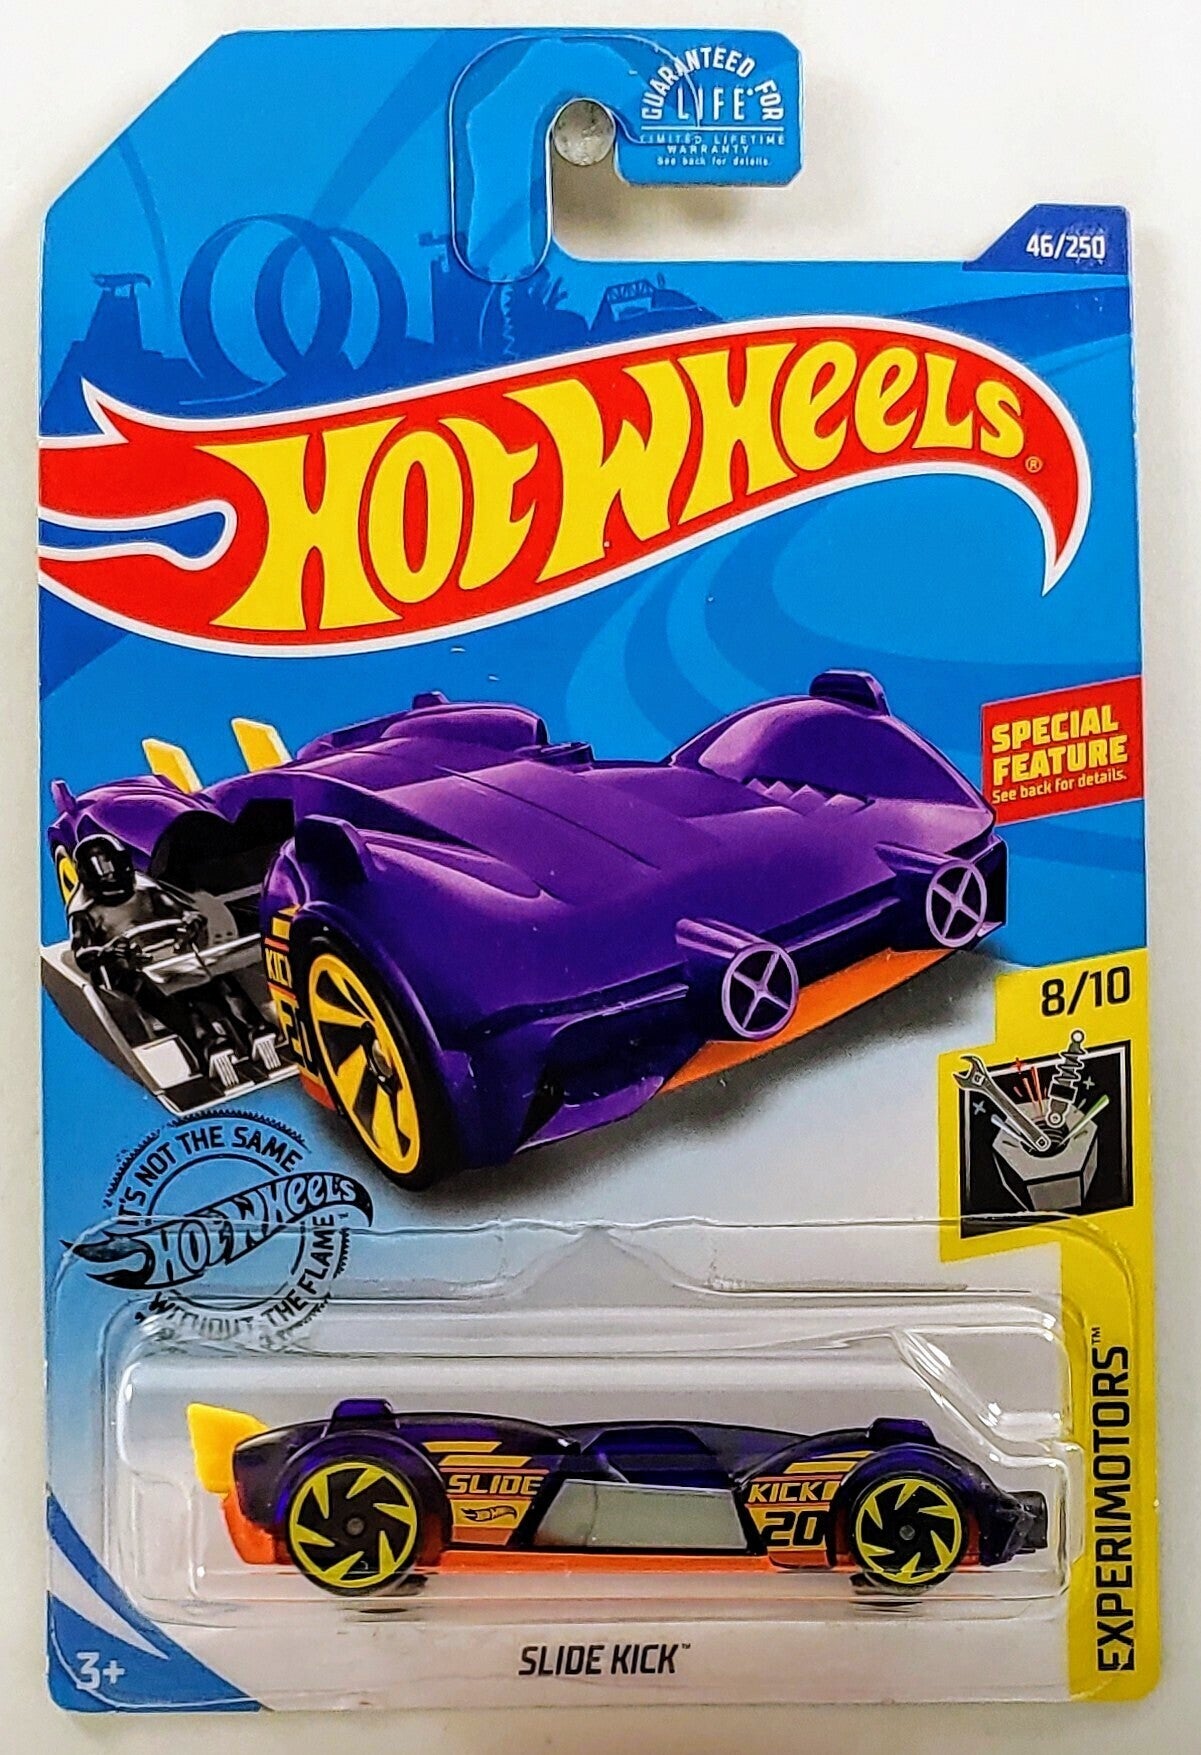 Hot Wheels 2020 - Collector # 046/250 - Experimotors 8/10 - Slide Kick - Purple